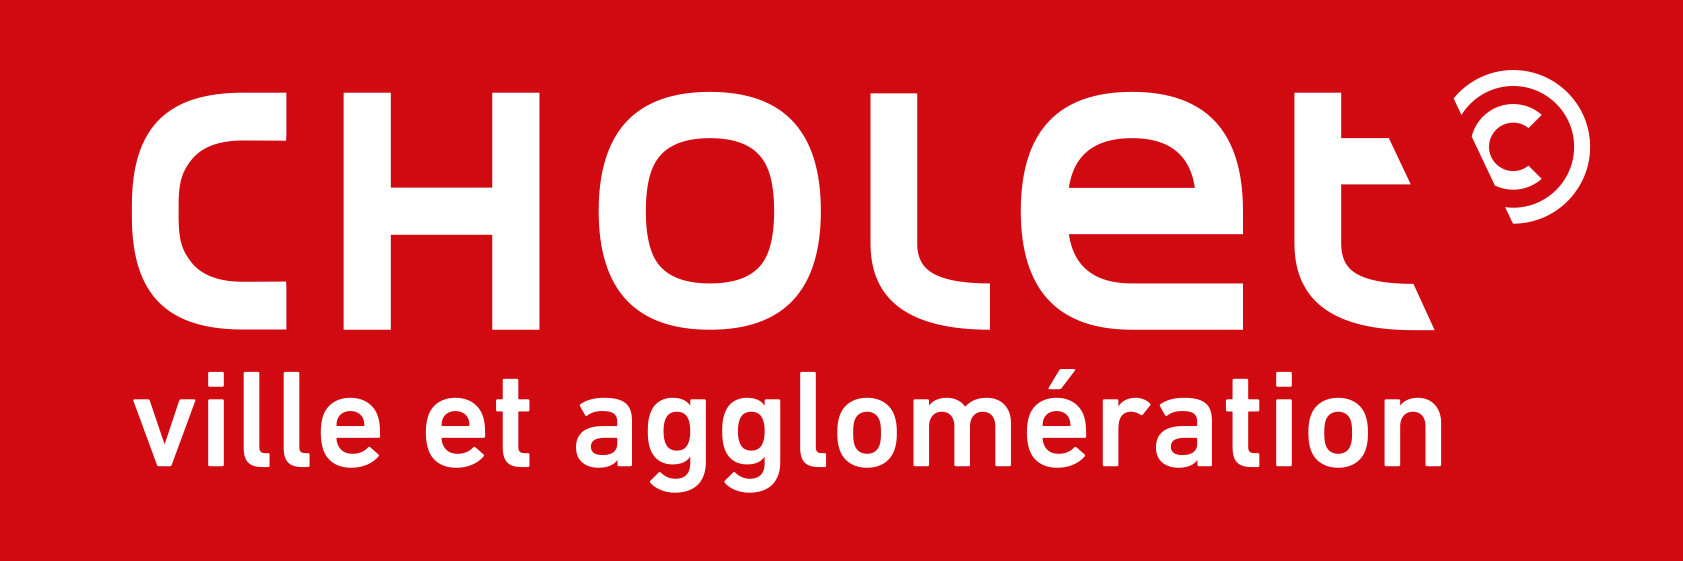 ville-agglo-logo-couleur-2853419